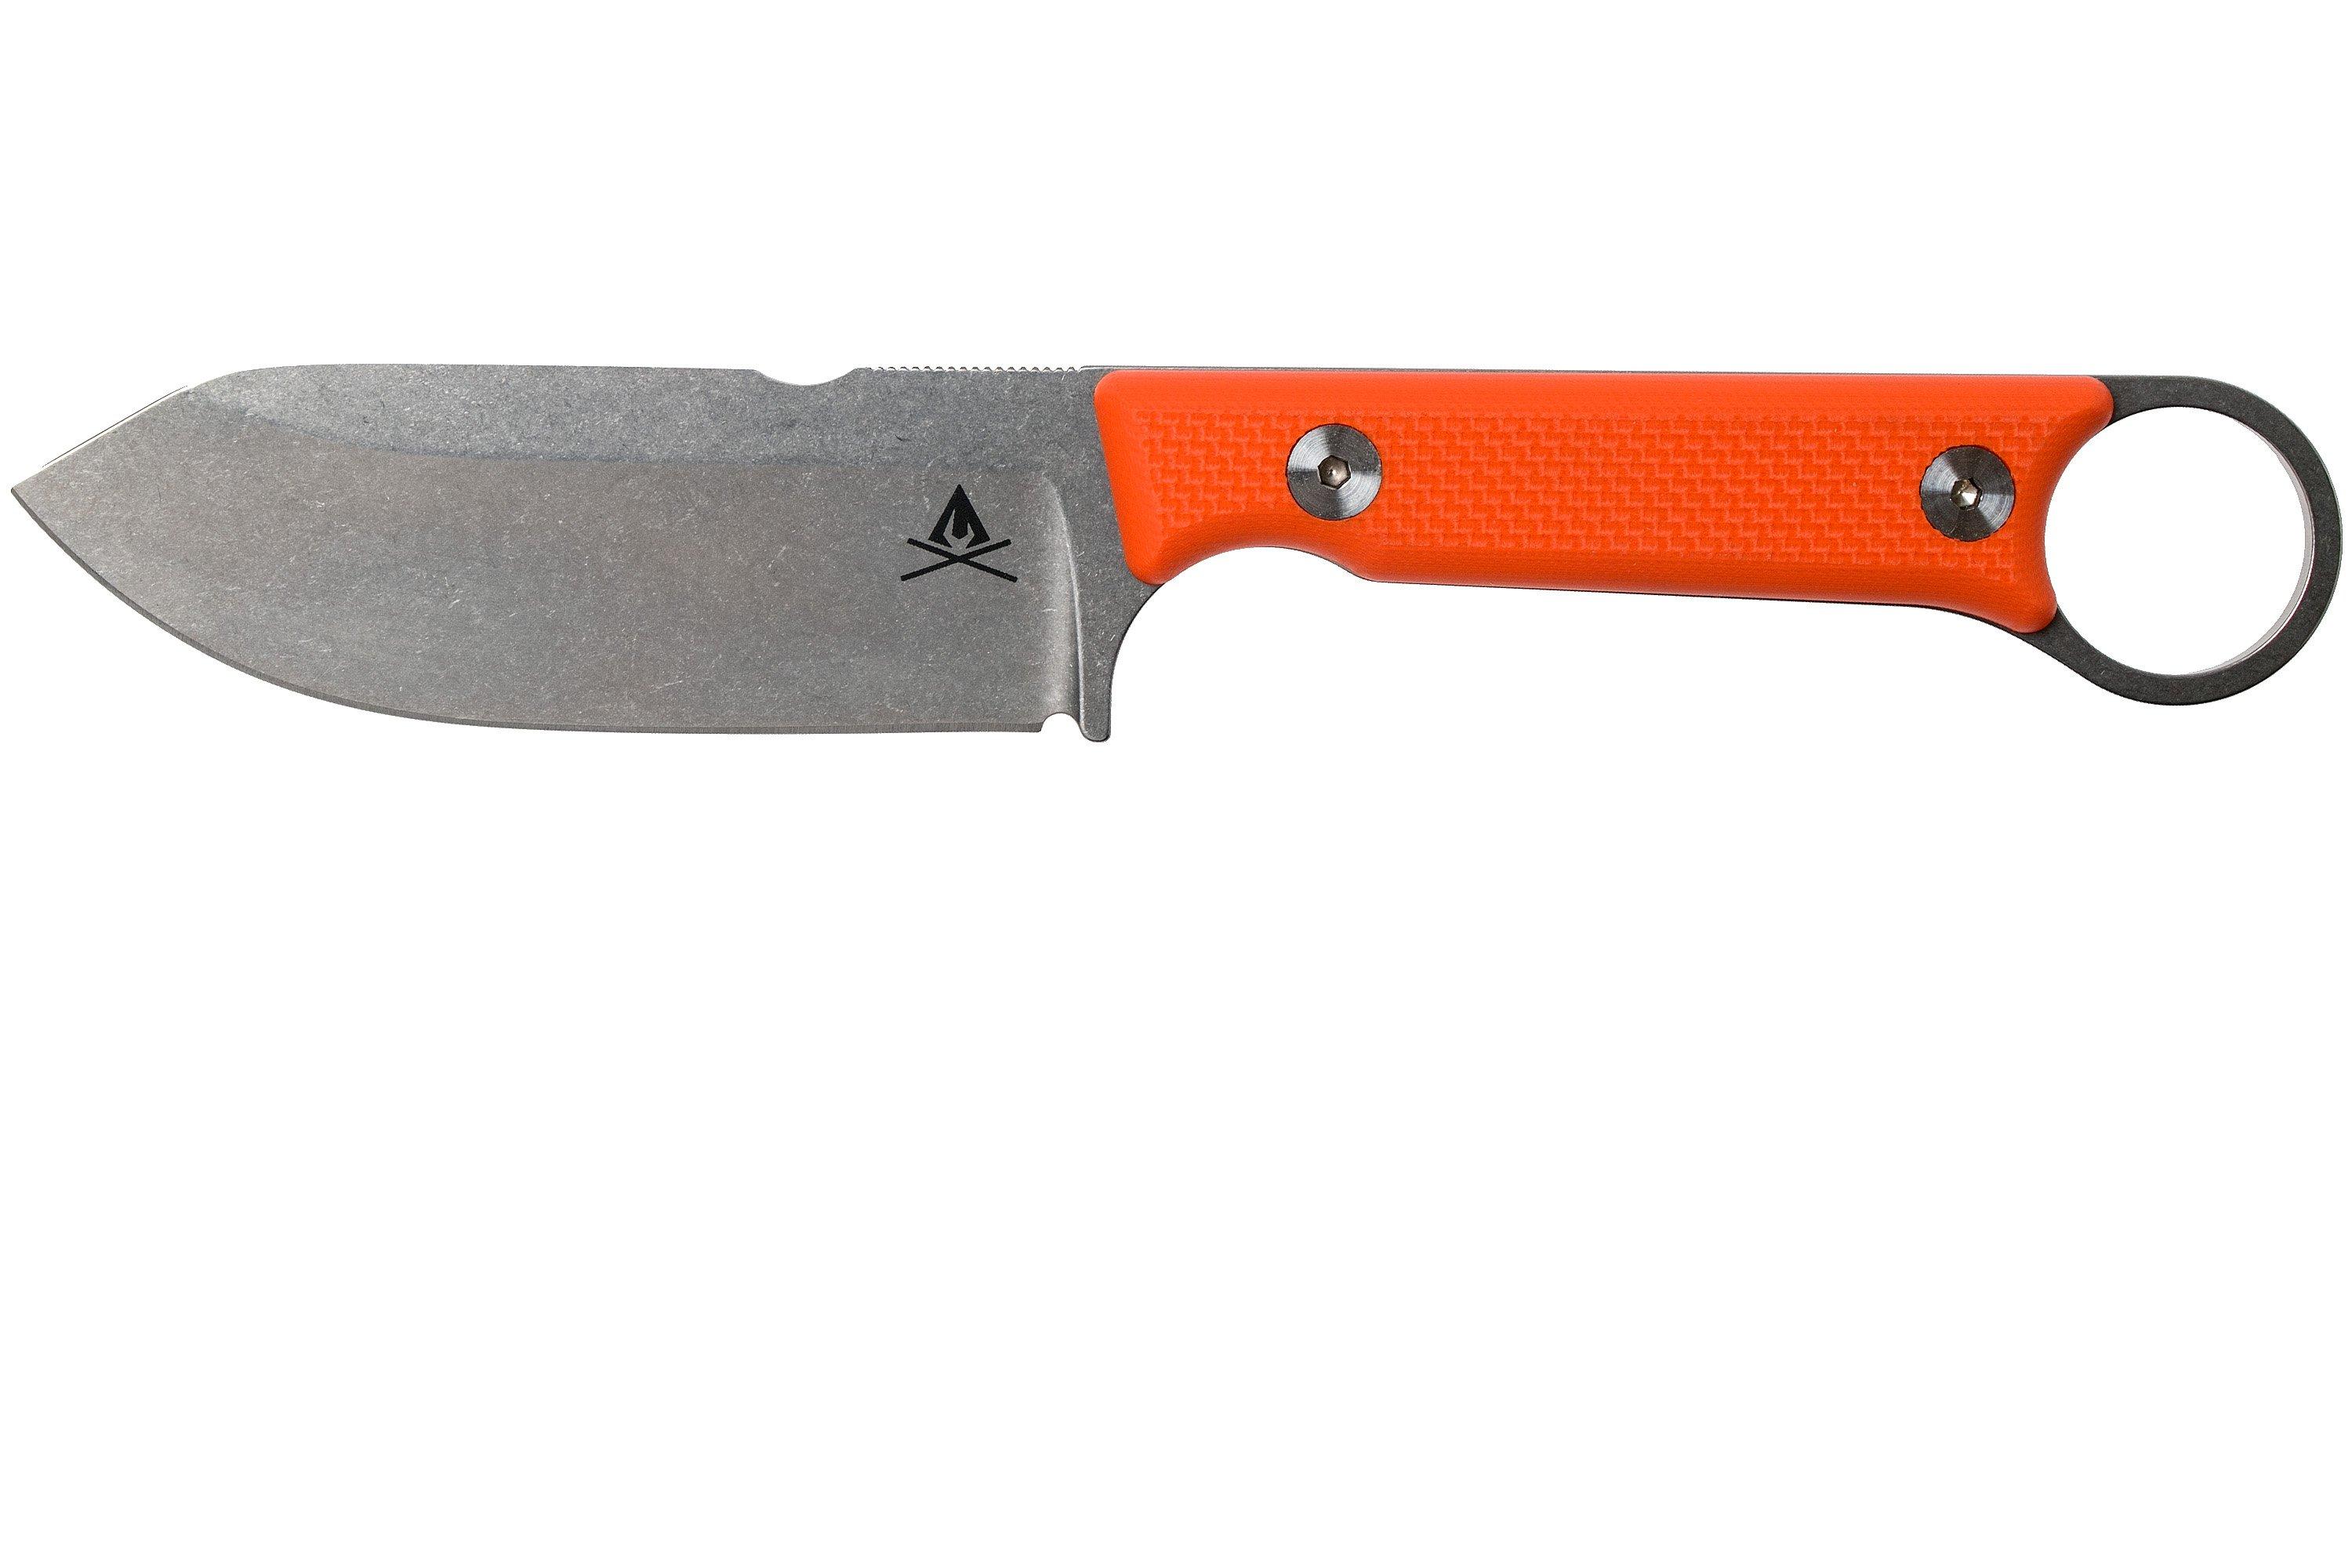 White River Knives FC3.5 Pro Firecraft survival knife Orange G10